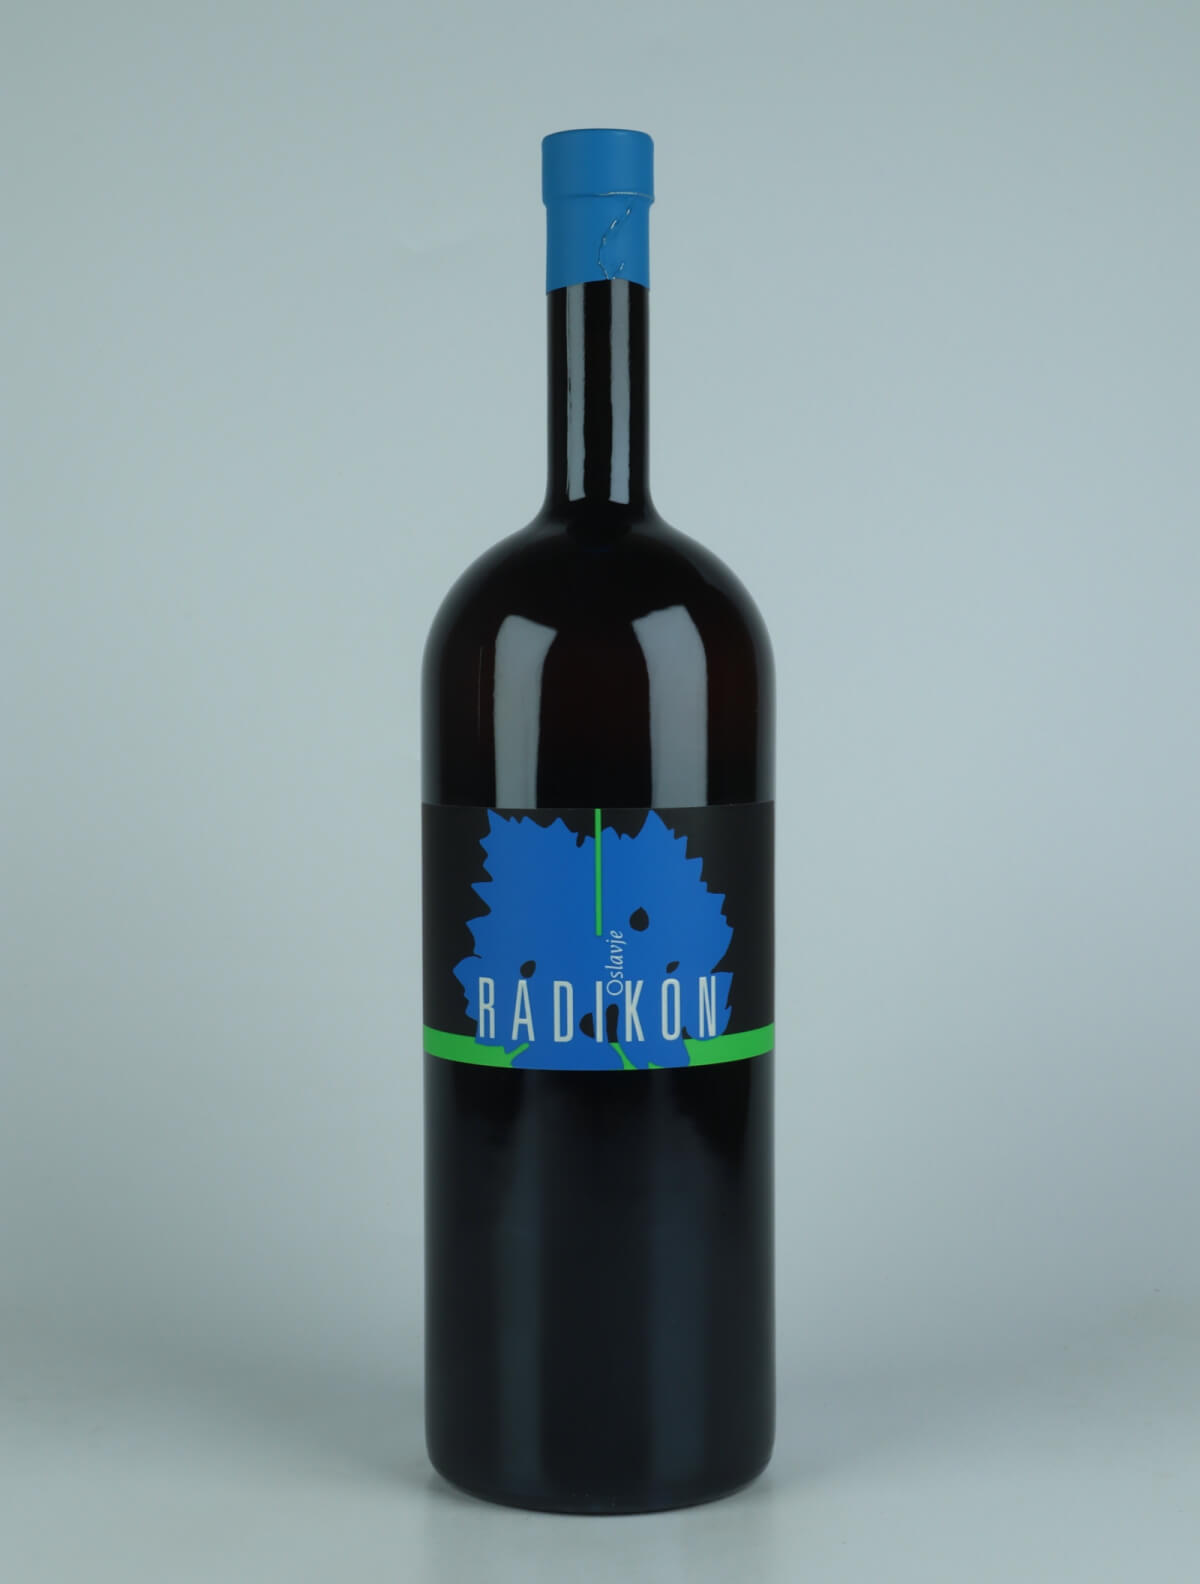 A bottle 2018 O...... Orange wine from Radikon, Friuli in Italy